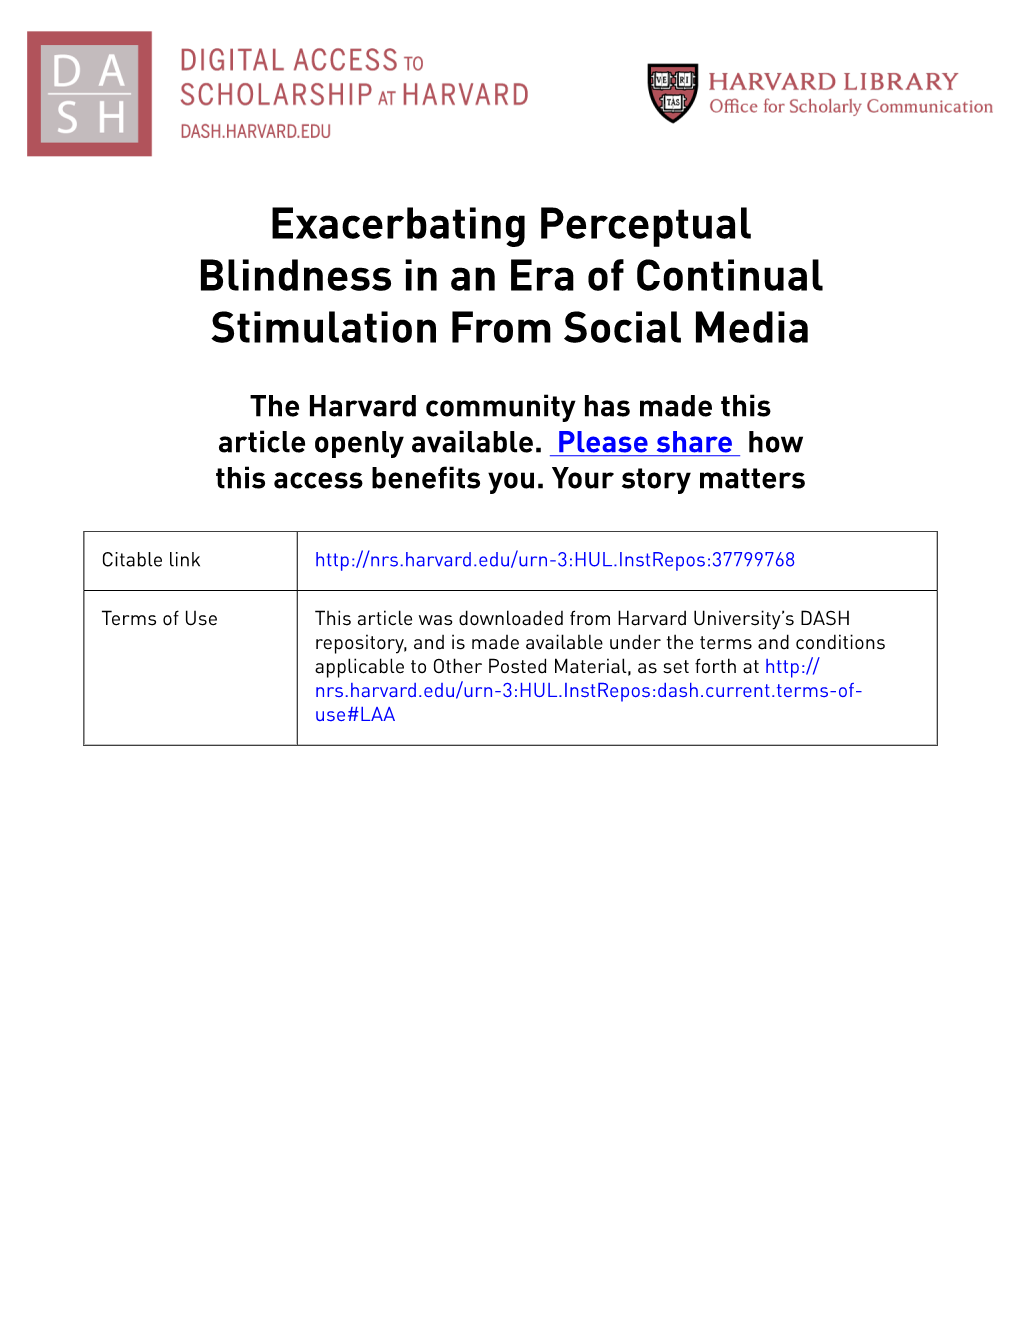 Exacerbating Perceptual Blindness in an Era of Continual Stimulation from Social Media